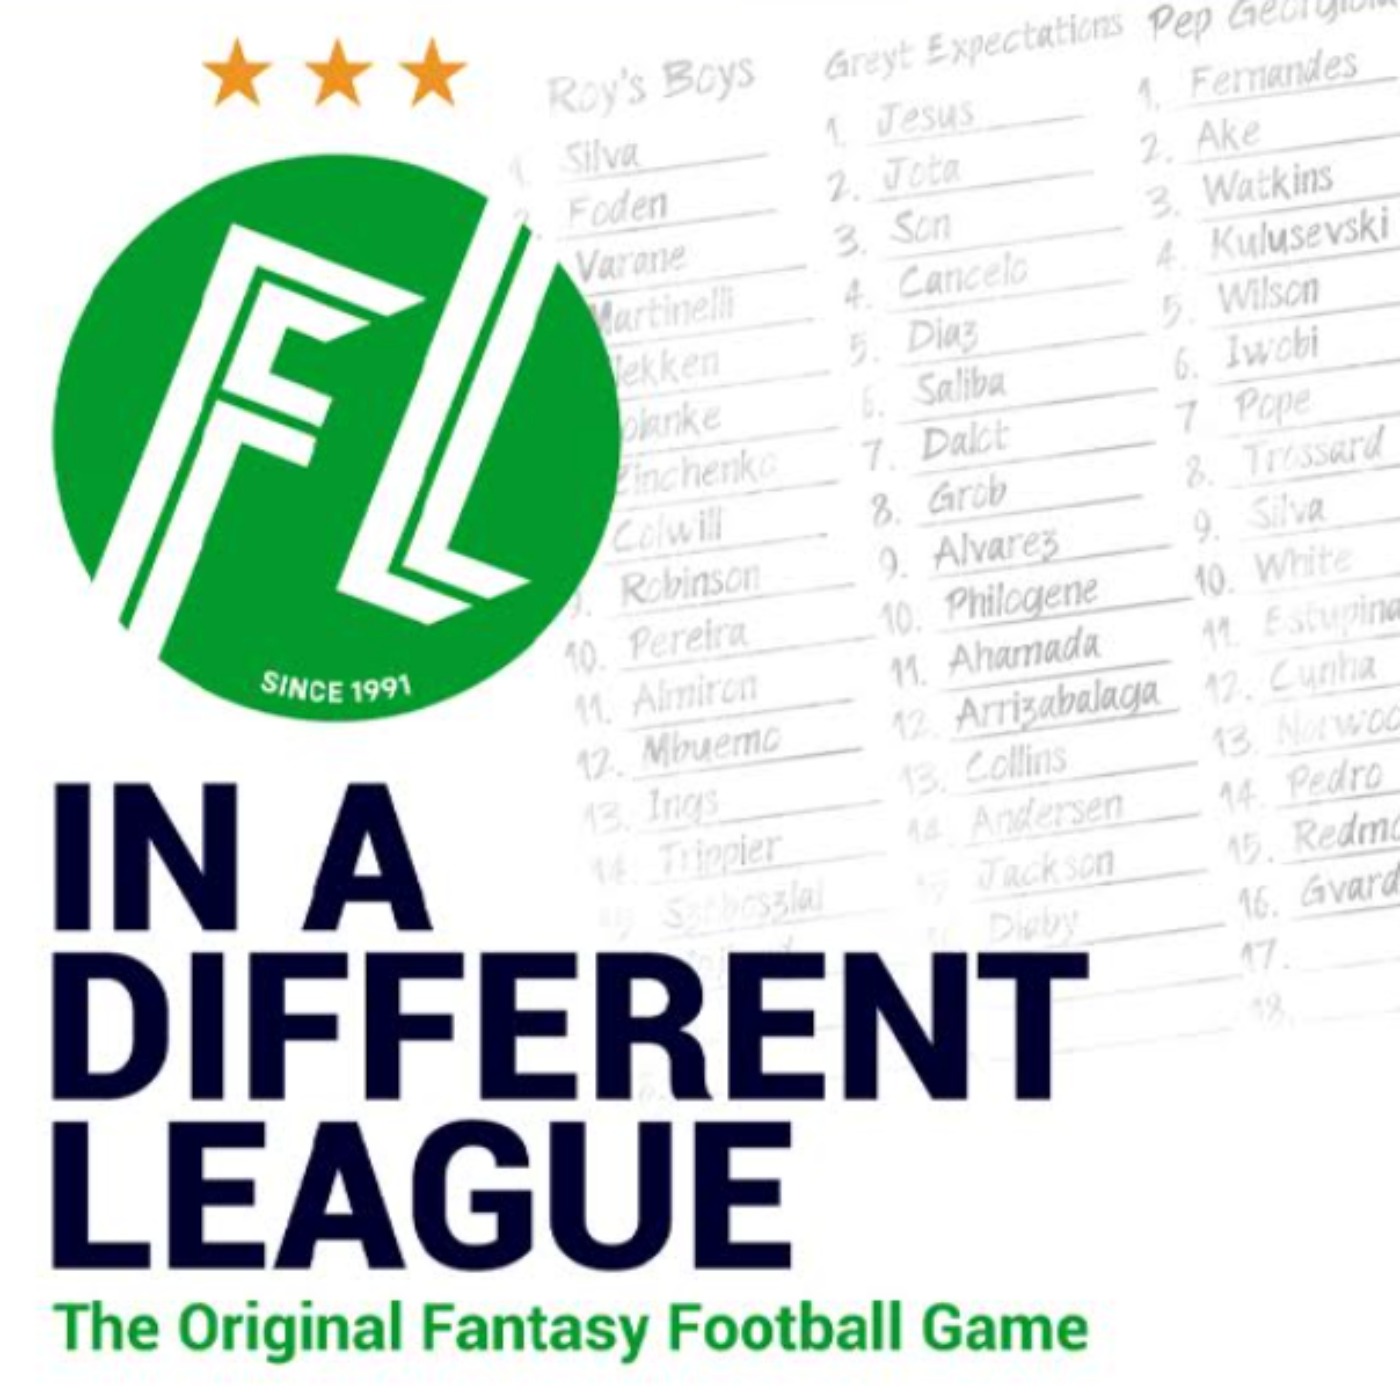 4. Fantasy League Explainer - How it compares to FPL